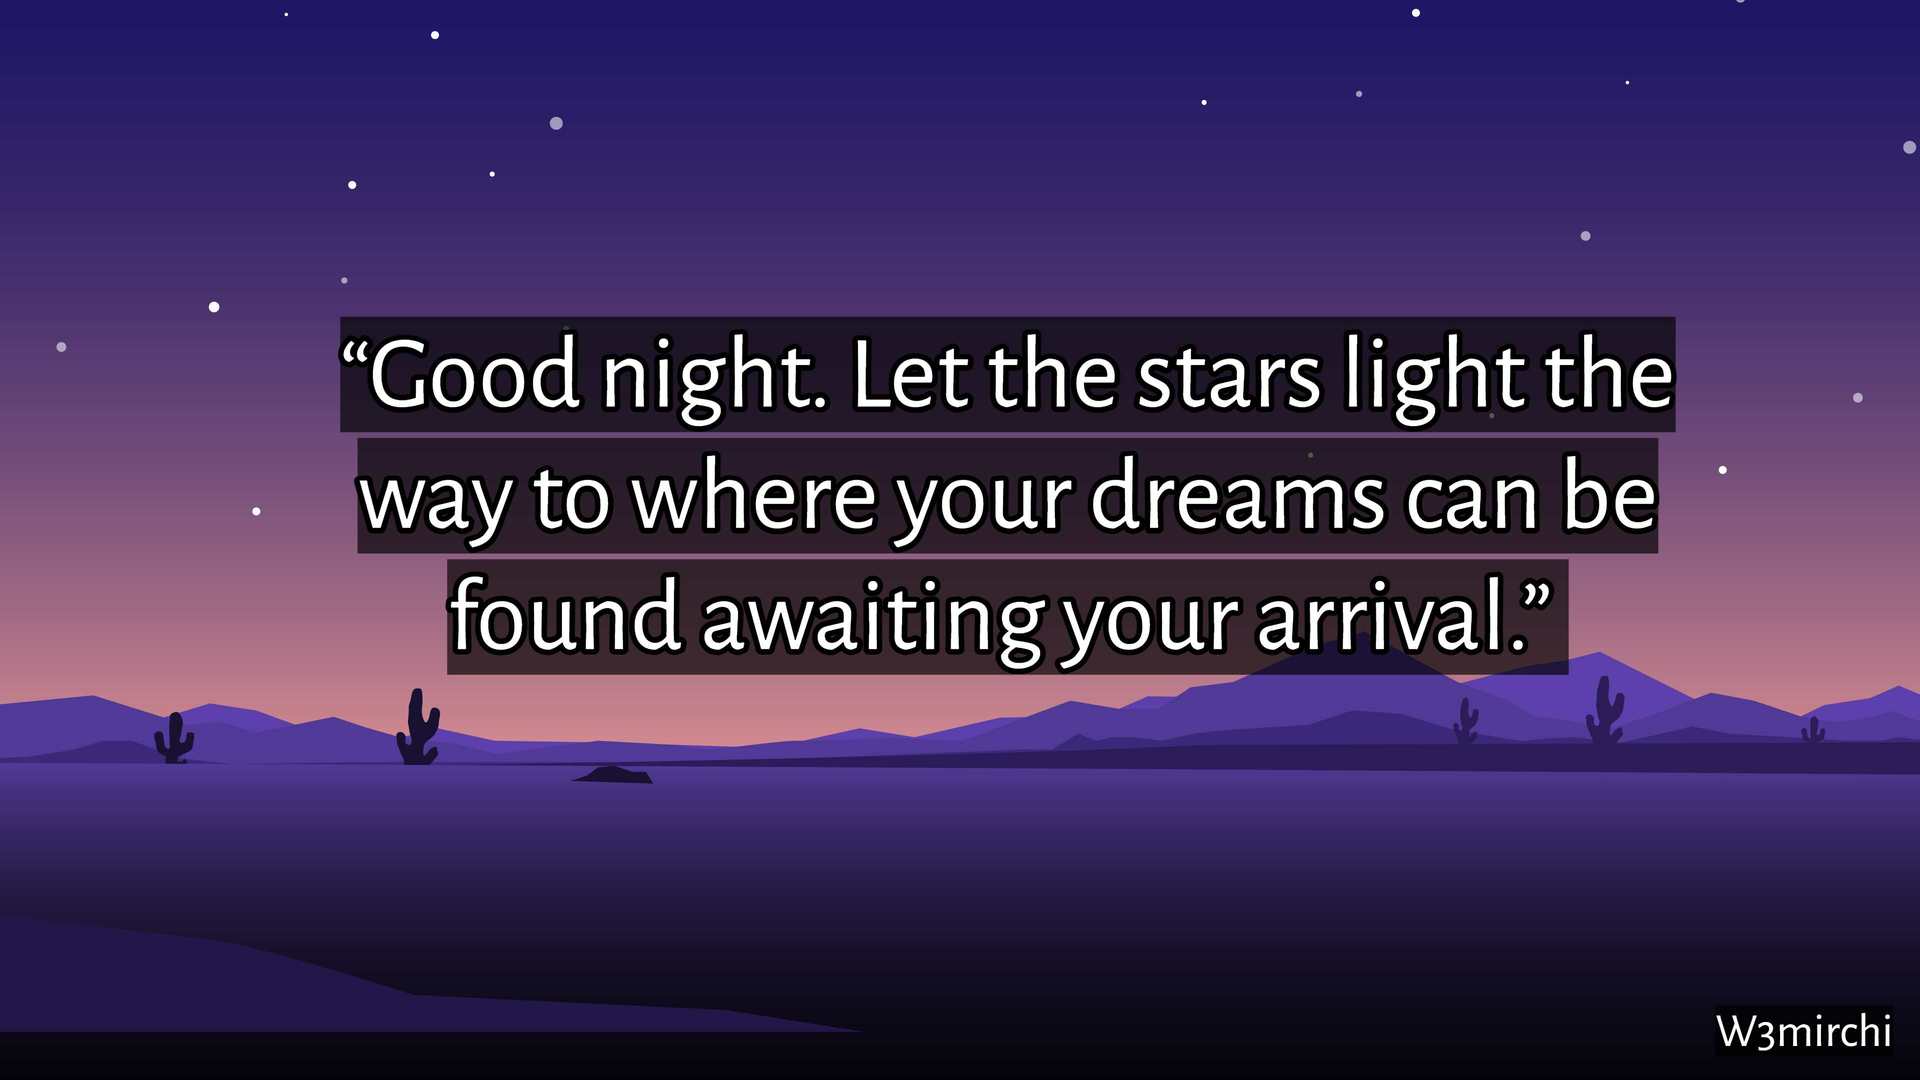 “Good night. Let the stars light